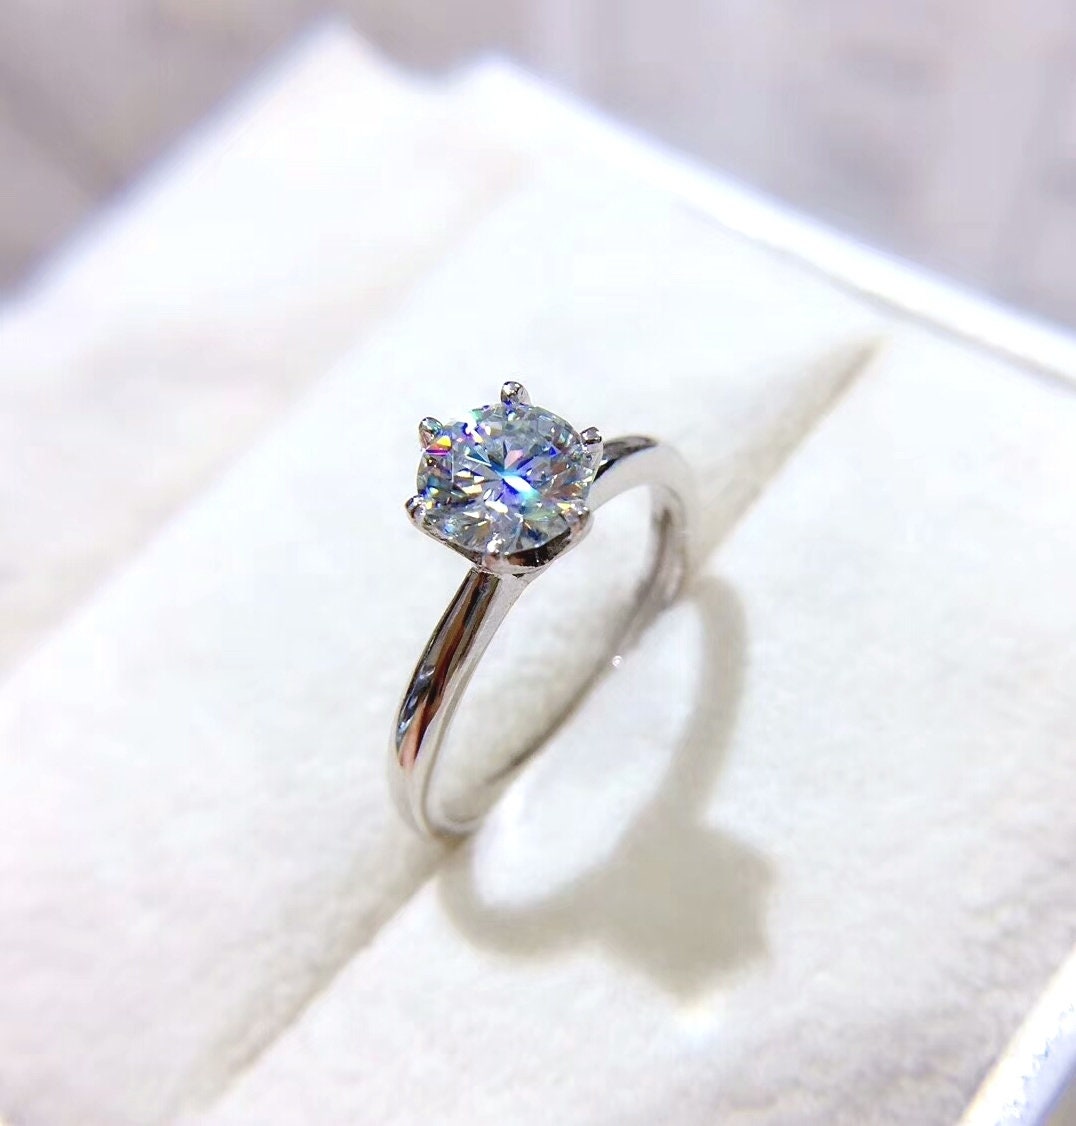 1 Carat Tiffany Style Moissanite Engagement Ring, Moissanite Diamond, S925 Sterling Silver, Wedding Handmade